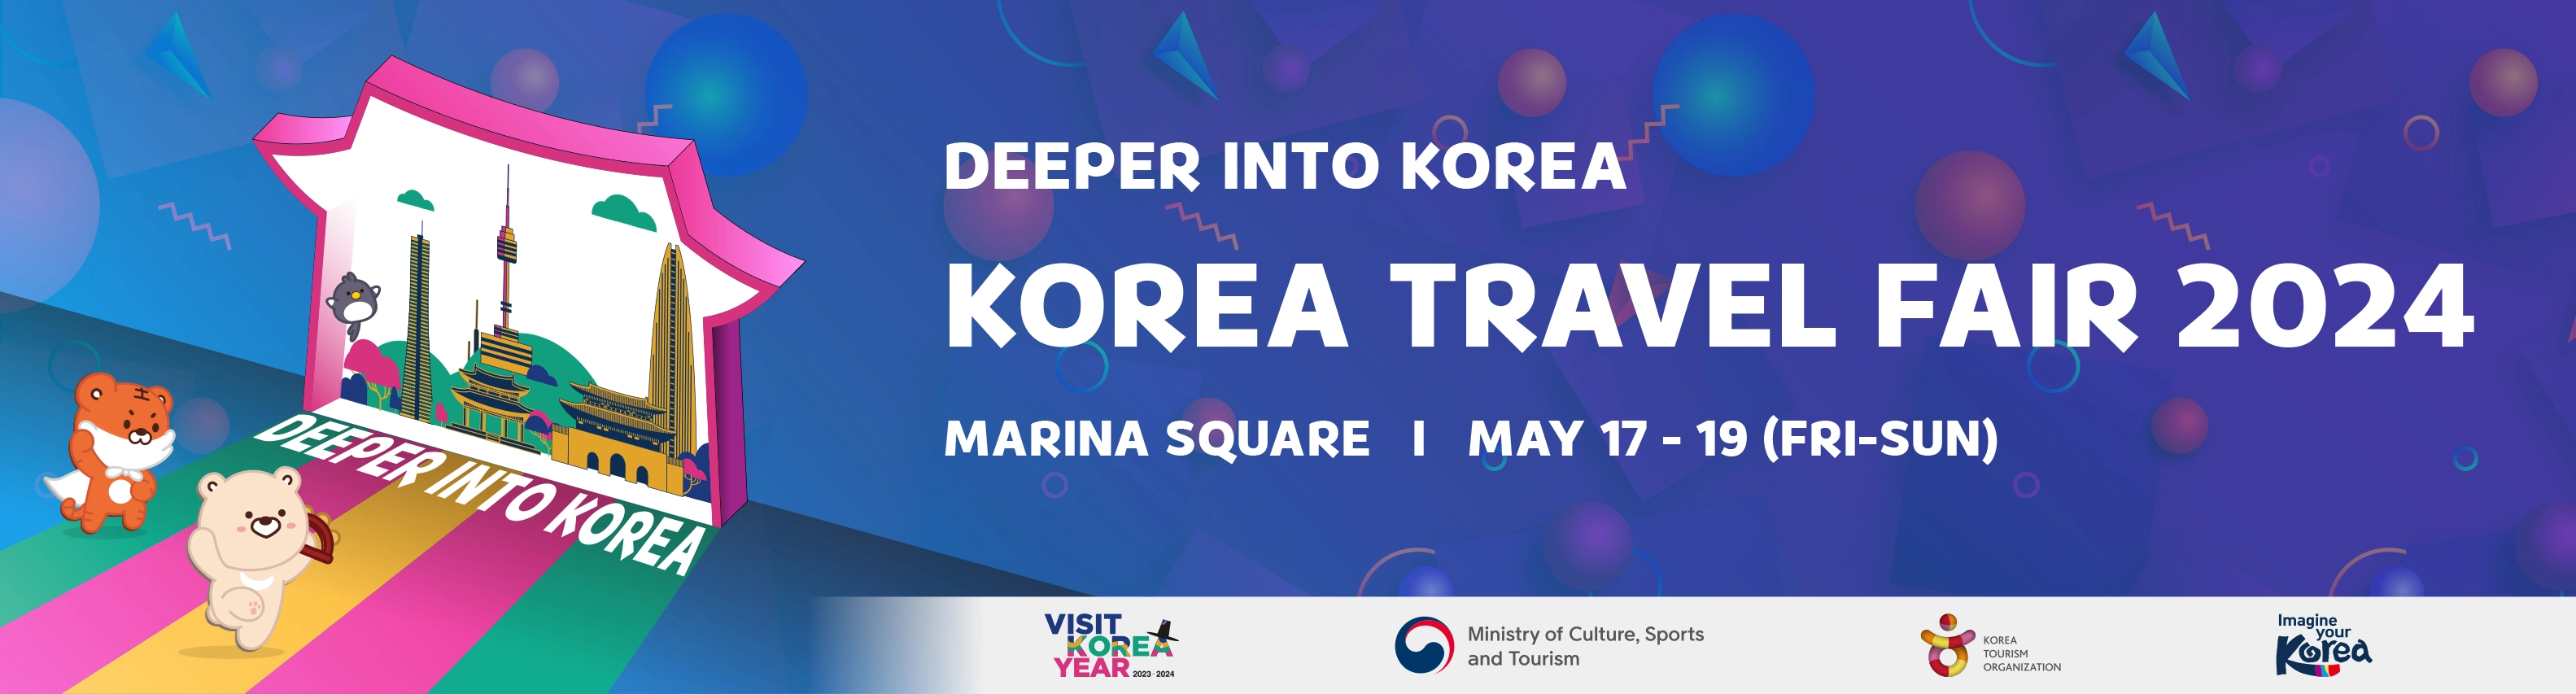 korean tourism organization banner